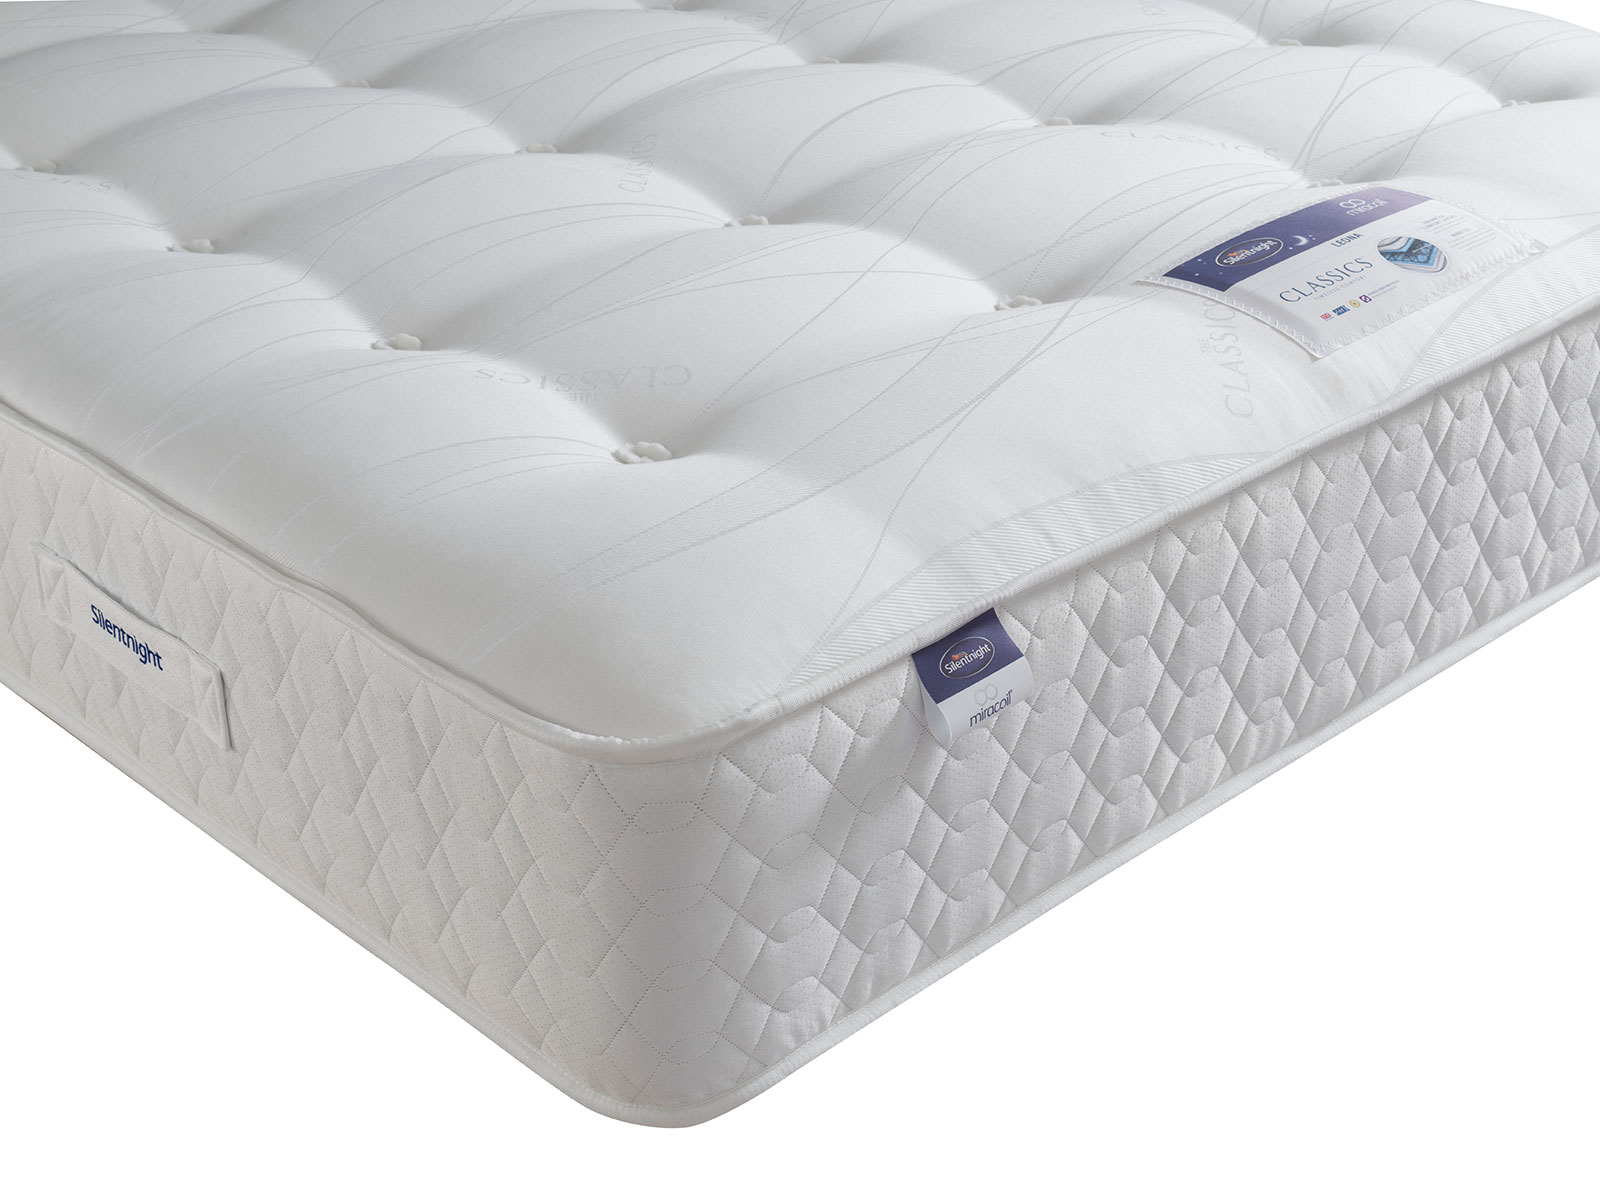 silent night mattress protectors waterproof